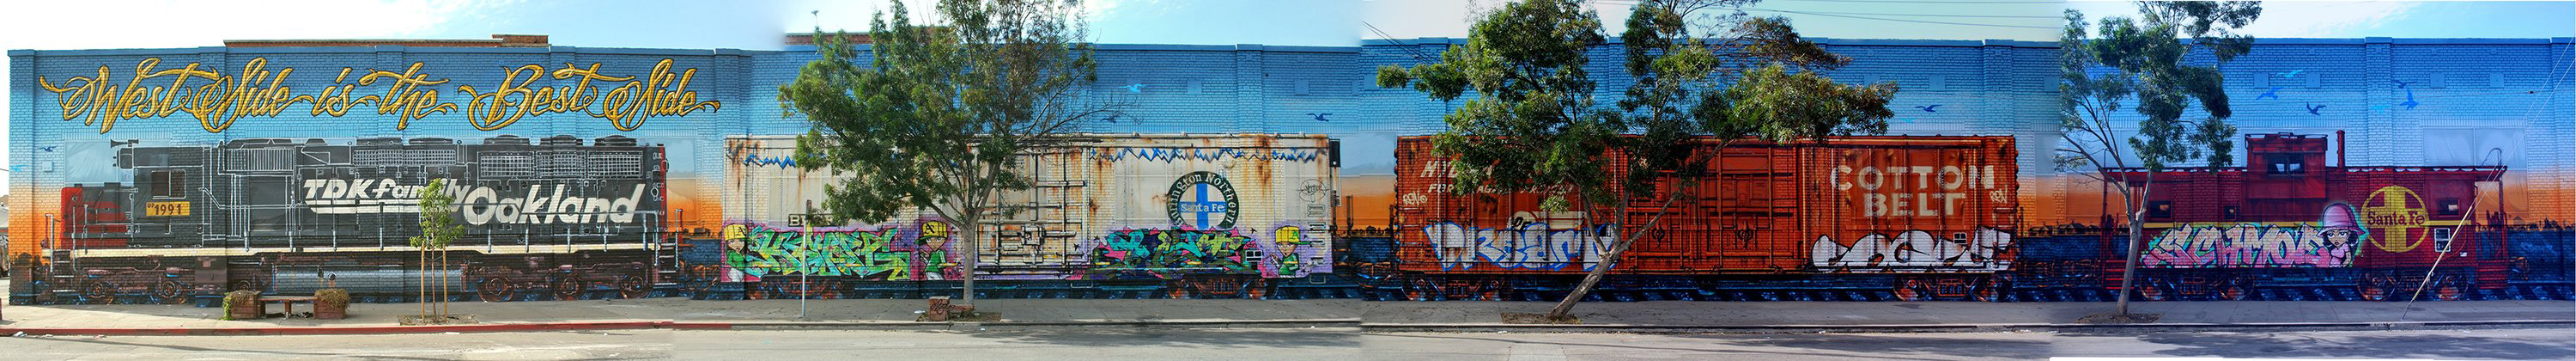 brooklyn-street-art-vogue-bam-jim-prigoff-oakland-09-14-web-15a